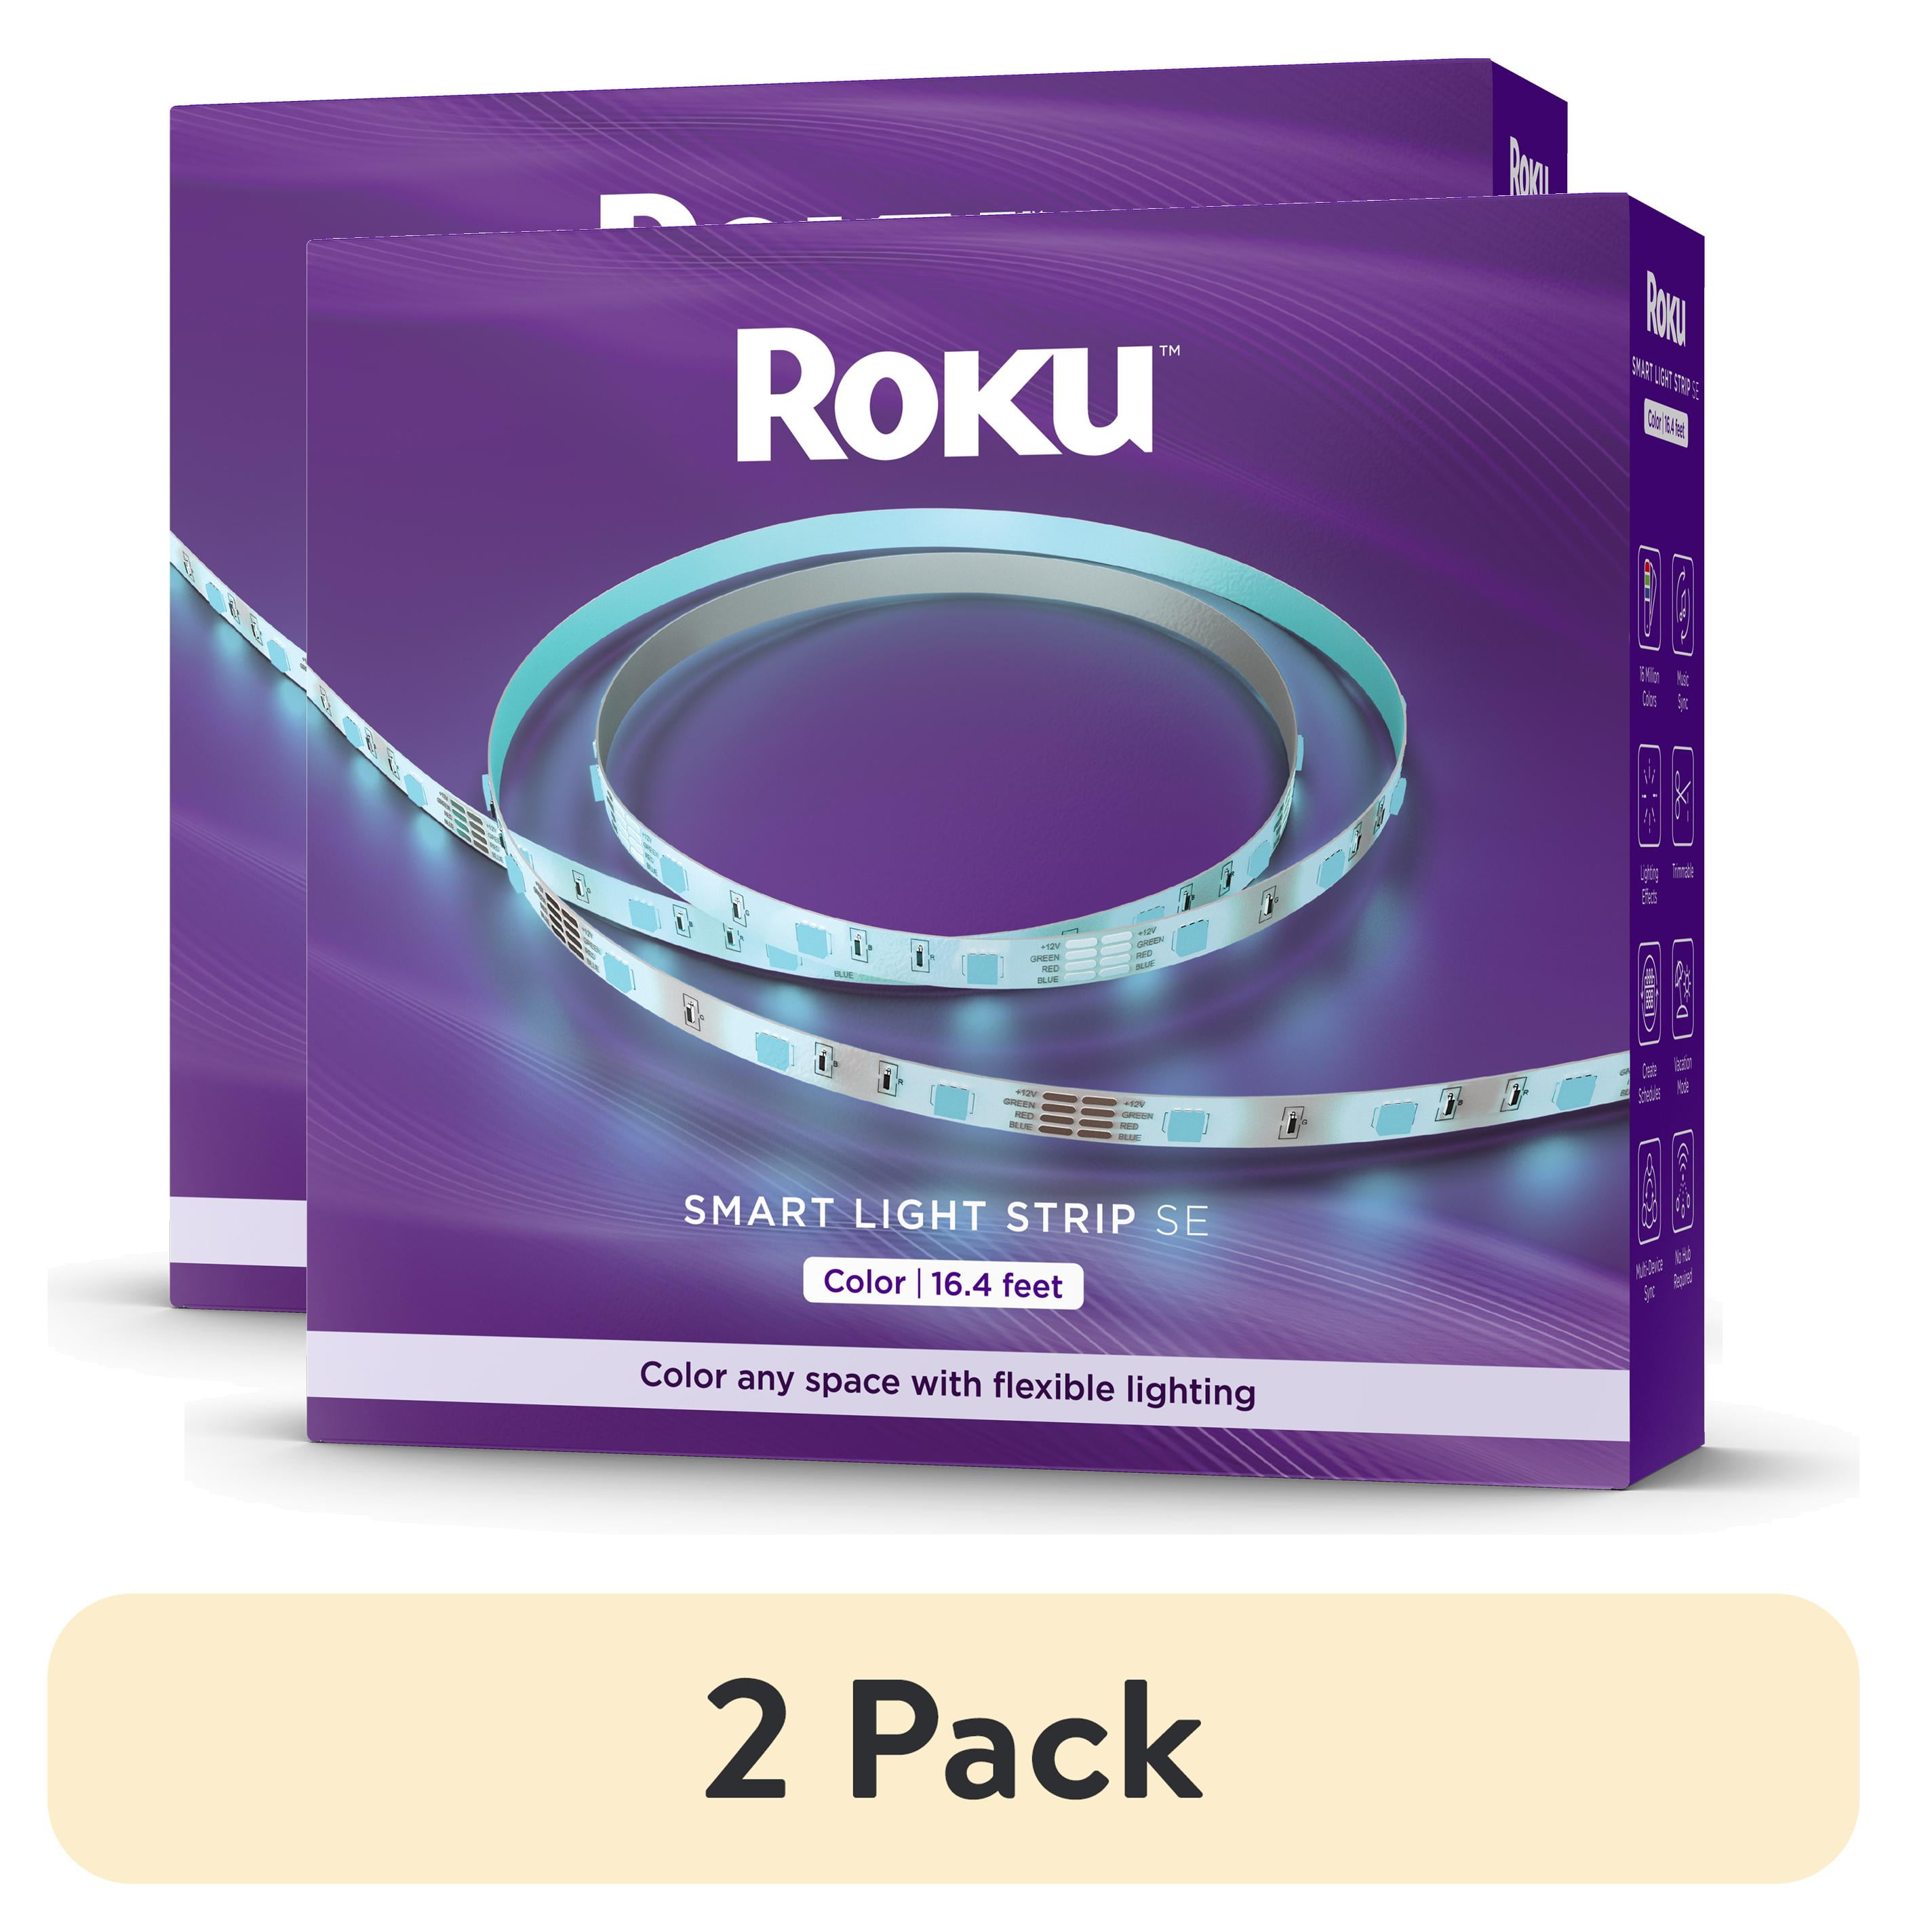 Roku Smart Home Smart Light Strip SE 16.4 Foot with 16 Million Color  Options, White Light Option, and Custom Presets - Indoor